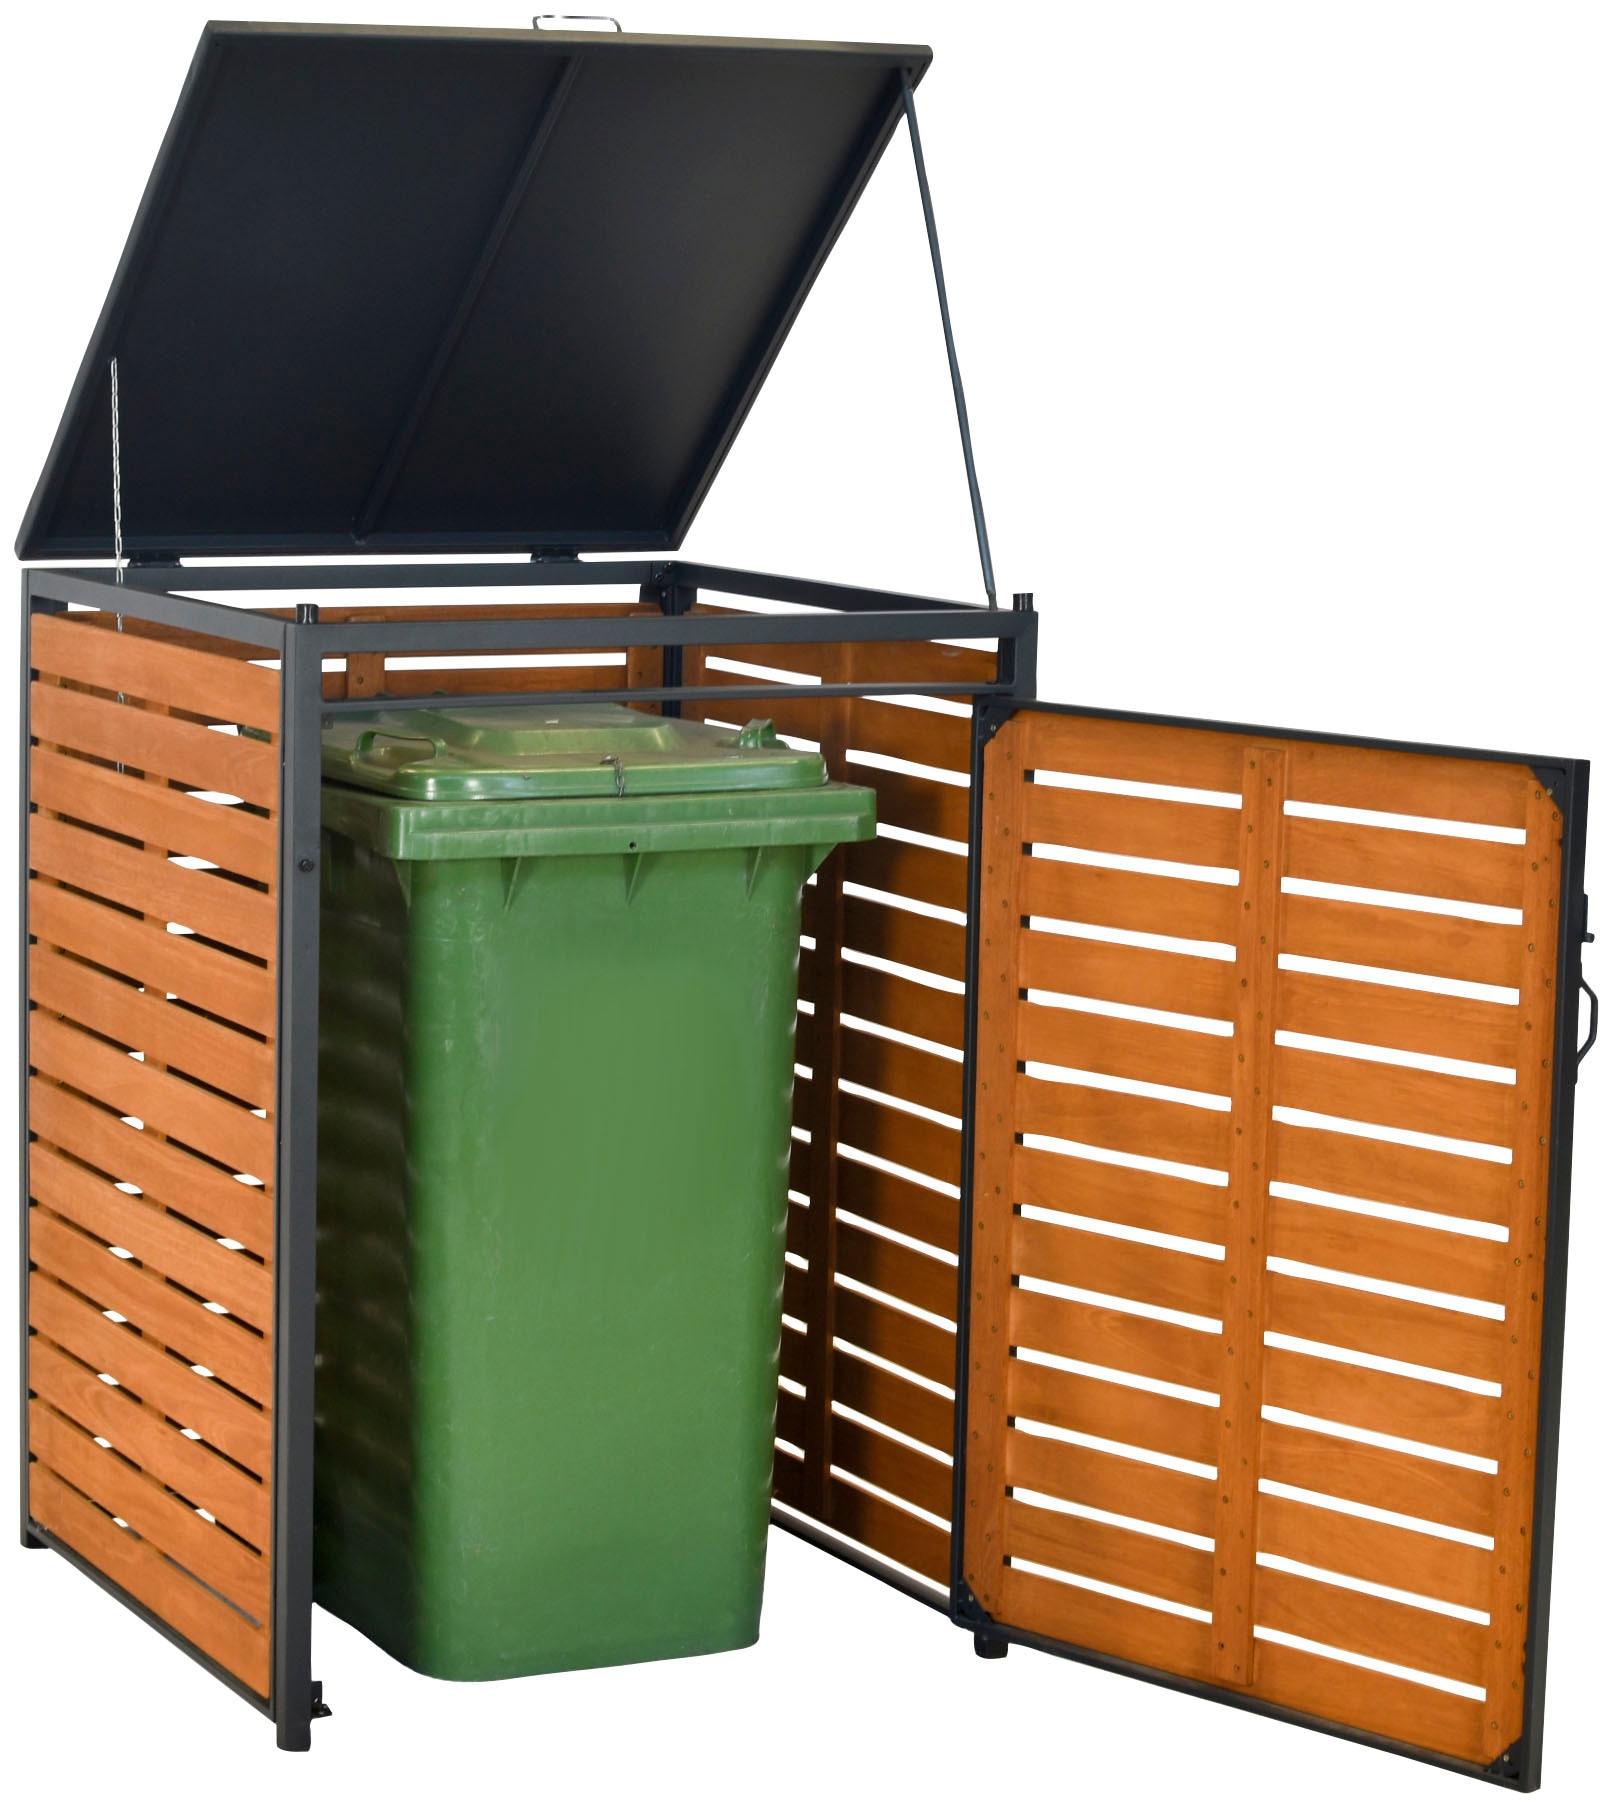 MERXX Mülltonnenbox »Basis Alu/Eukalyptus«, für 120 Liter Mülltonne